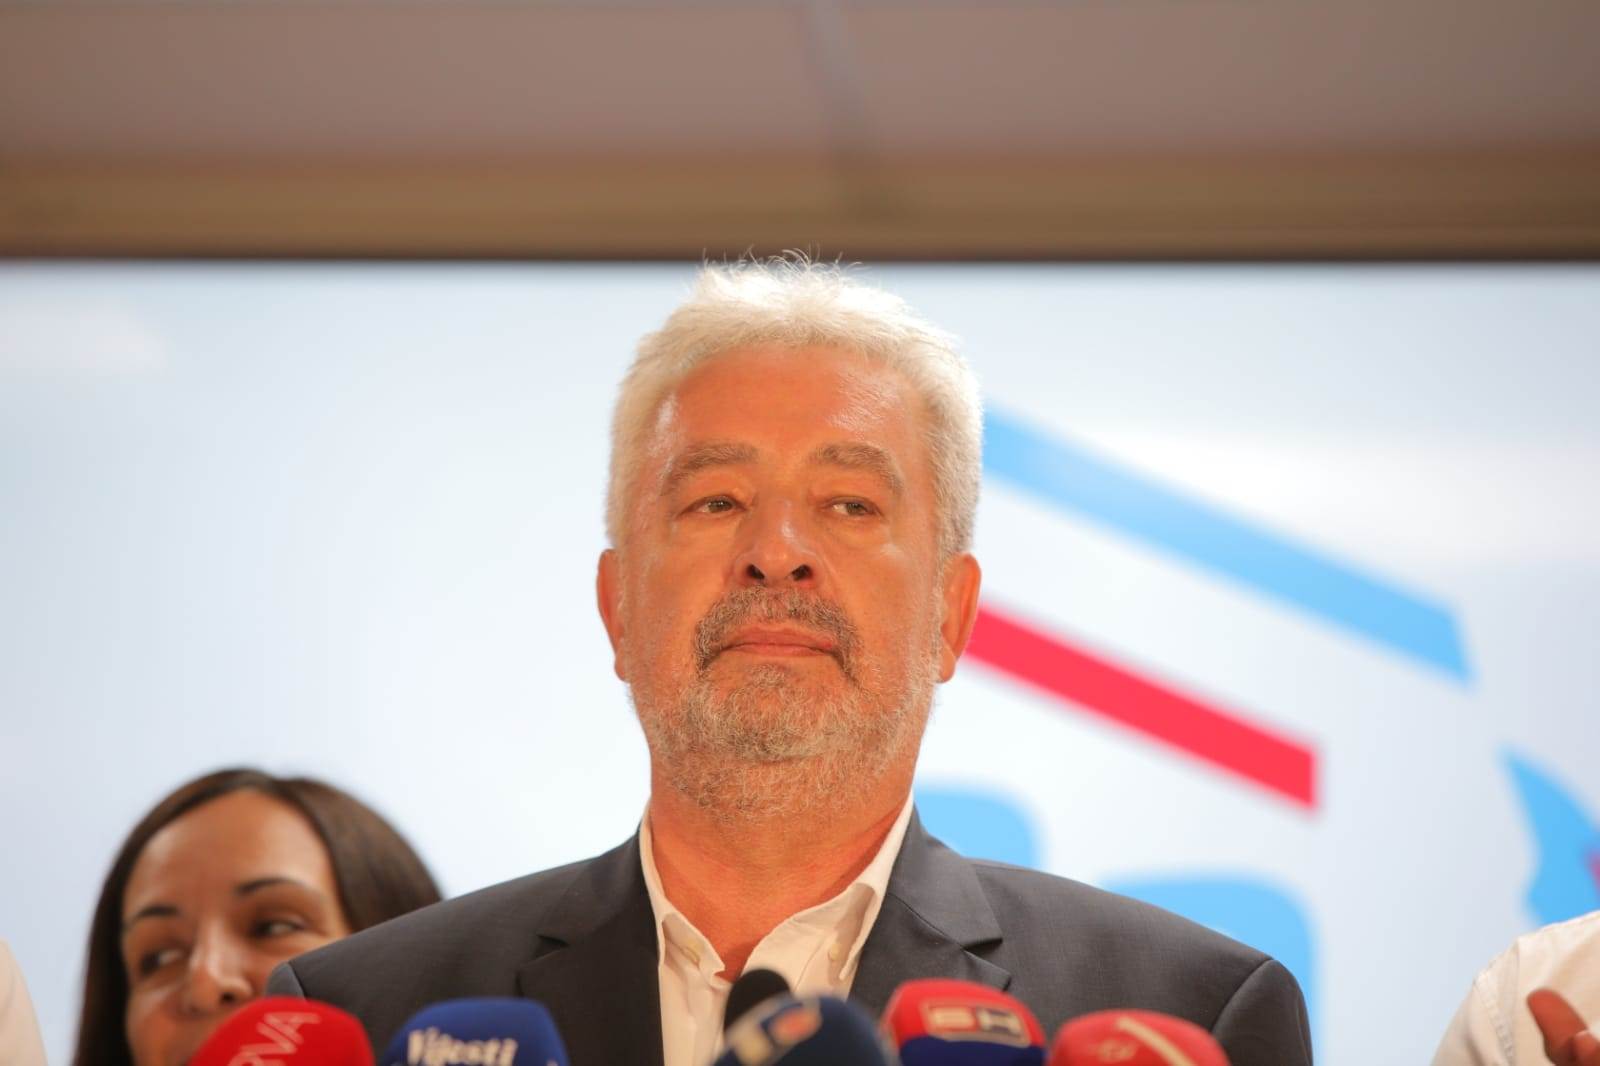  Crna Gora - Izbori 2020 - Nova Vlada - Zdravko Krivokapić - Dritan Abazović - DPS - pritisci  - Novo 